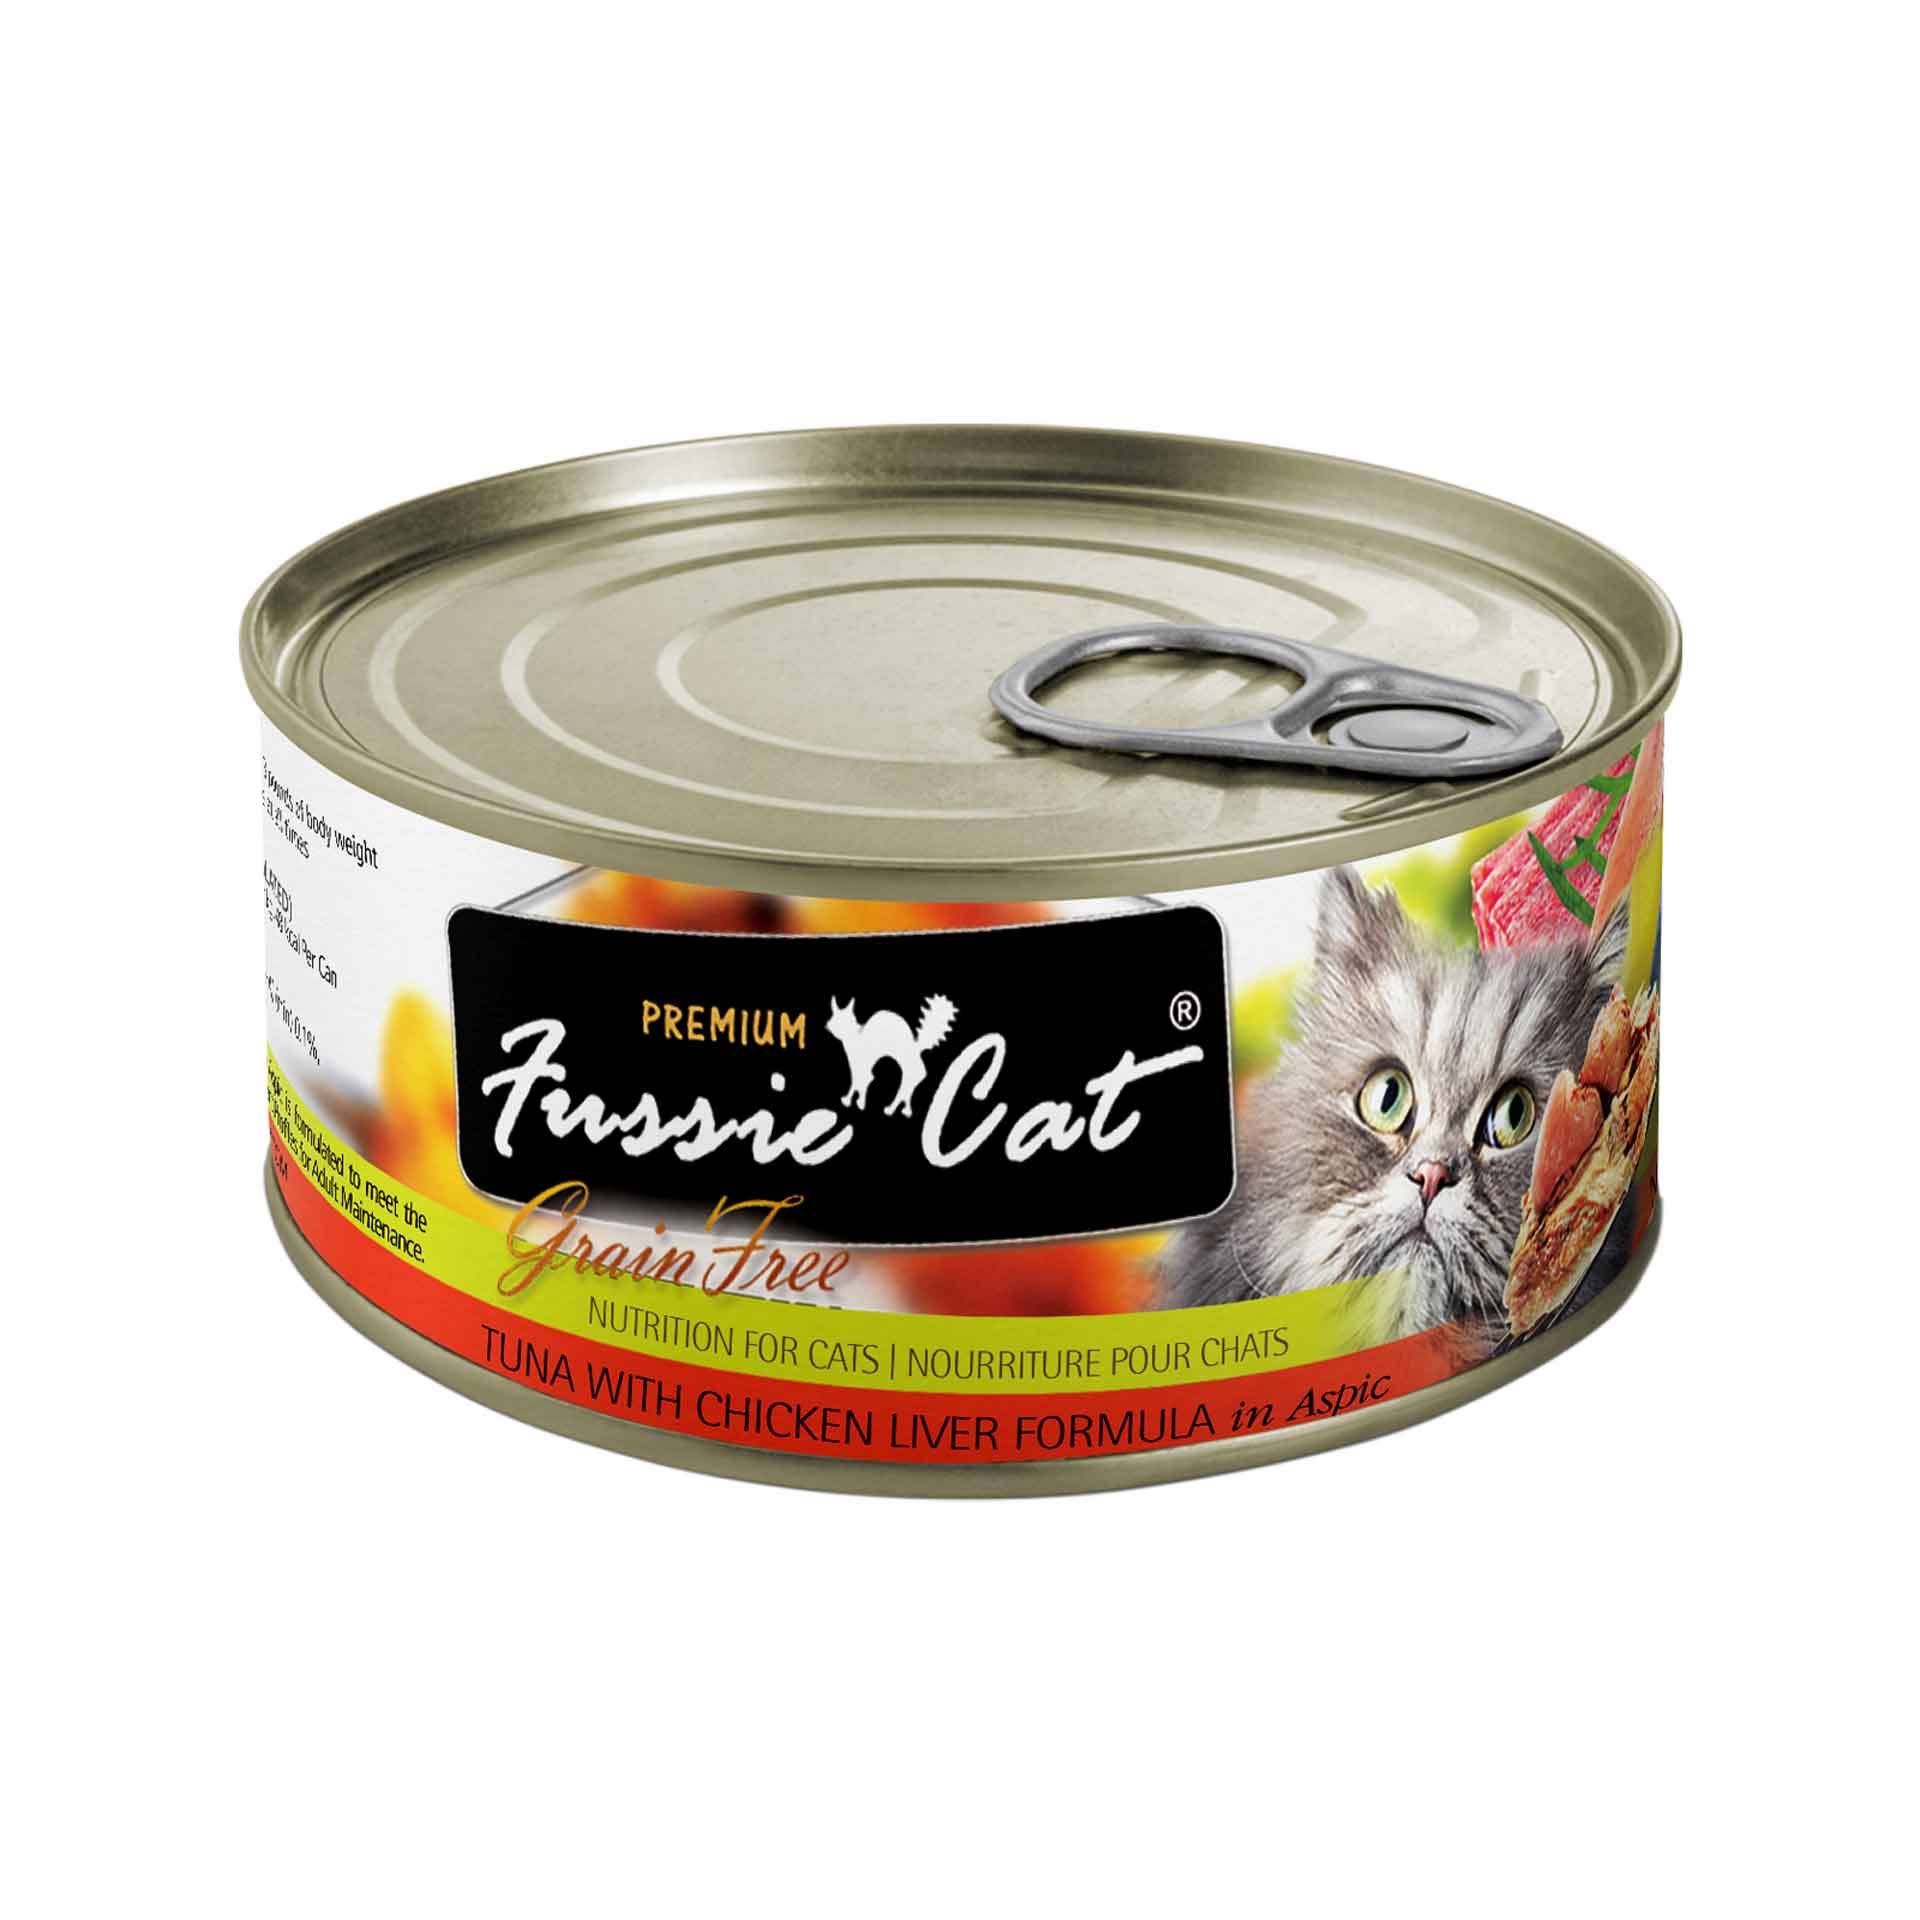 Fussie Cat Premium Tuna with Chicken Liver Formula in Aspic 2.82 oz